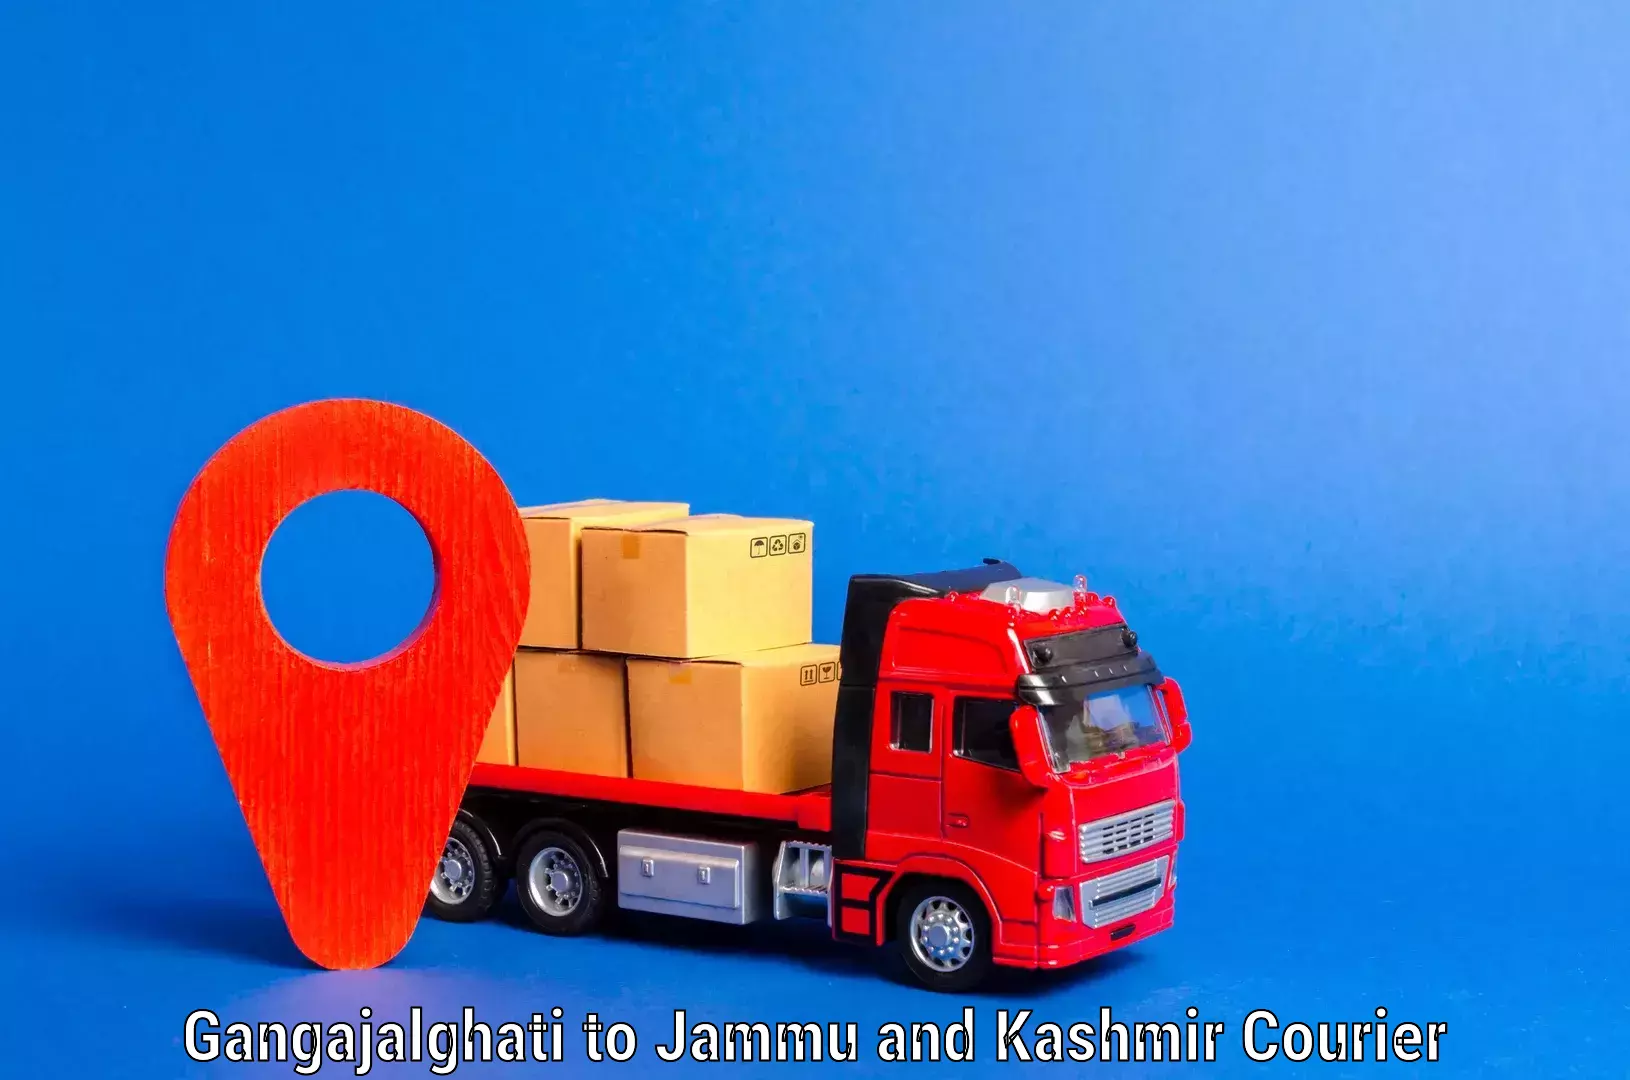 Furniture moving experts Gangajalghati to Jammu and Kashmir